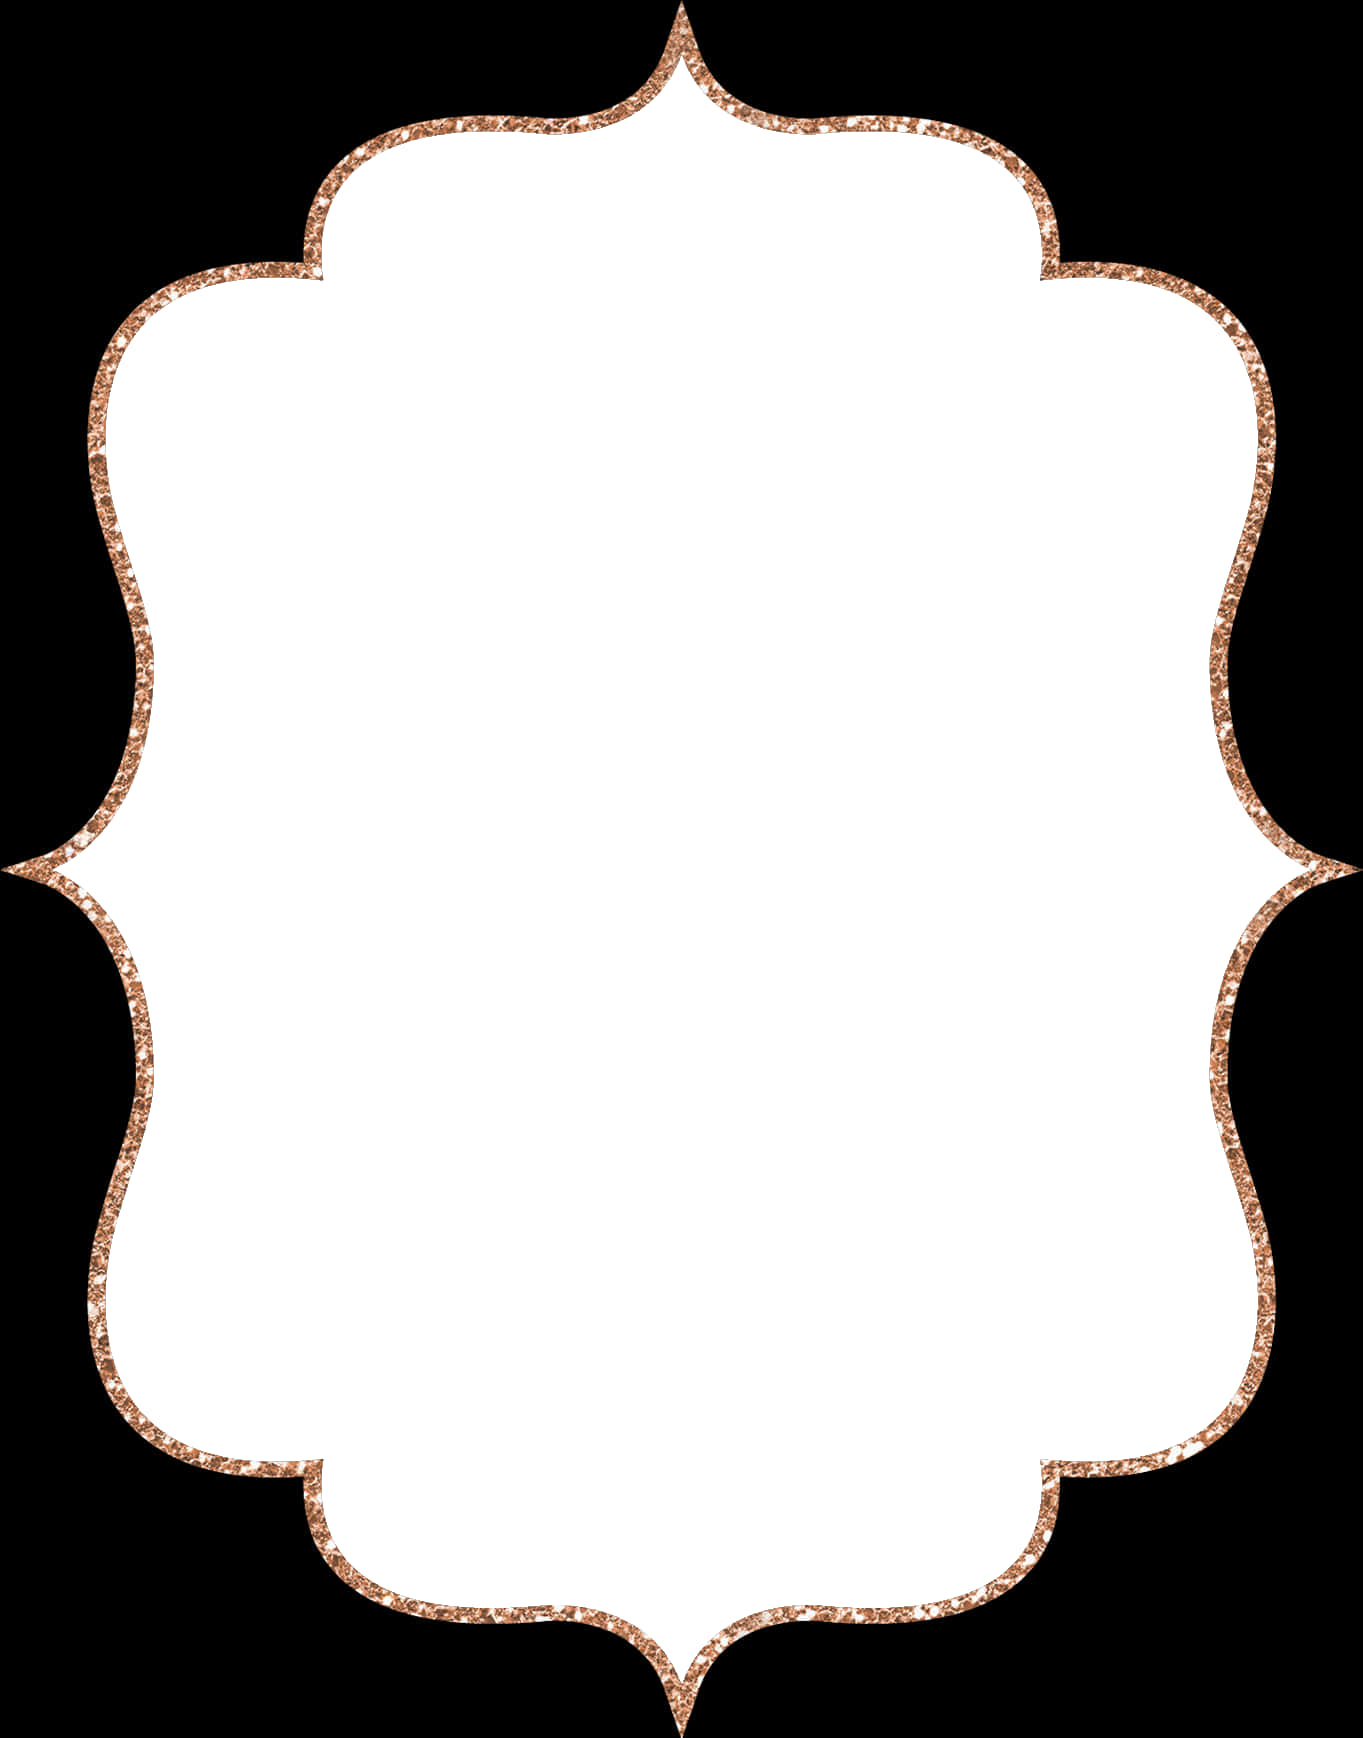 A White Frame With Orange Speckled Border